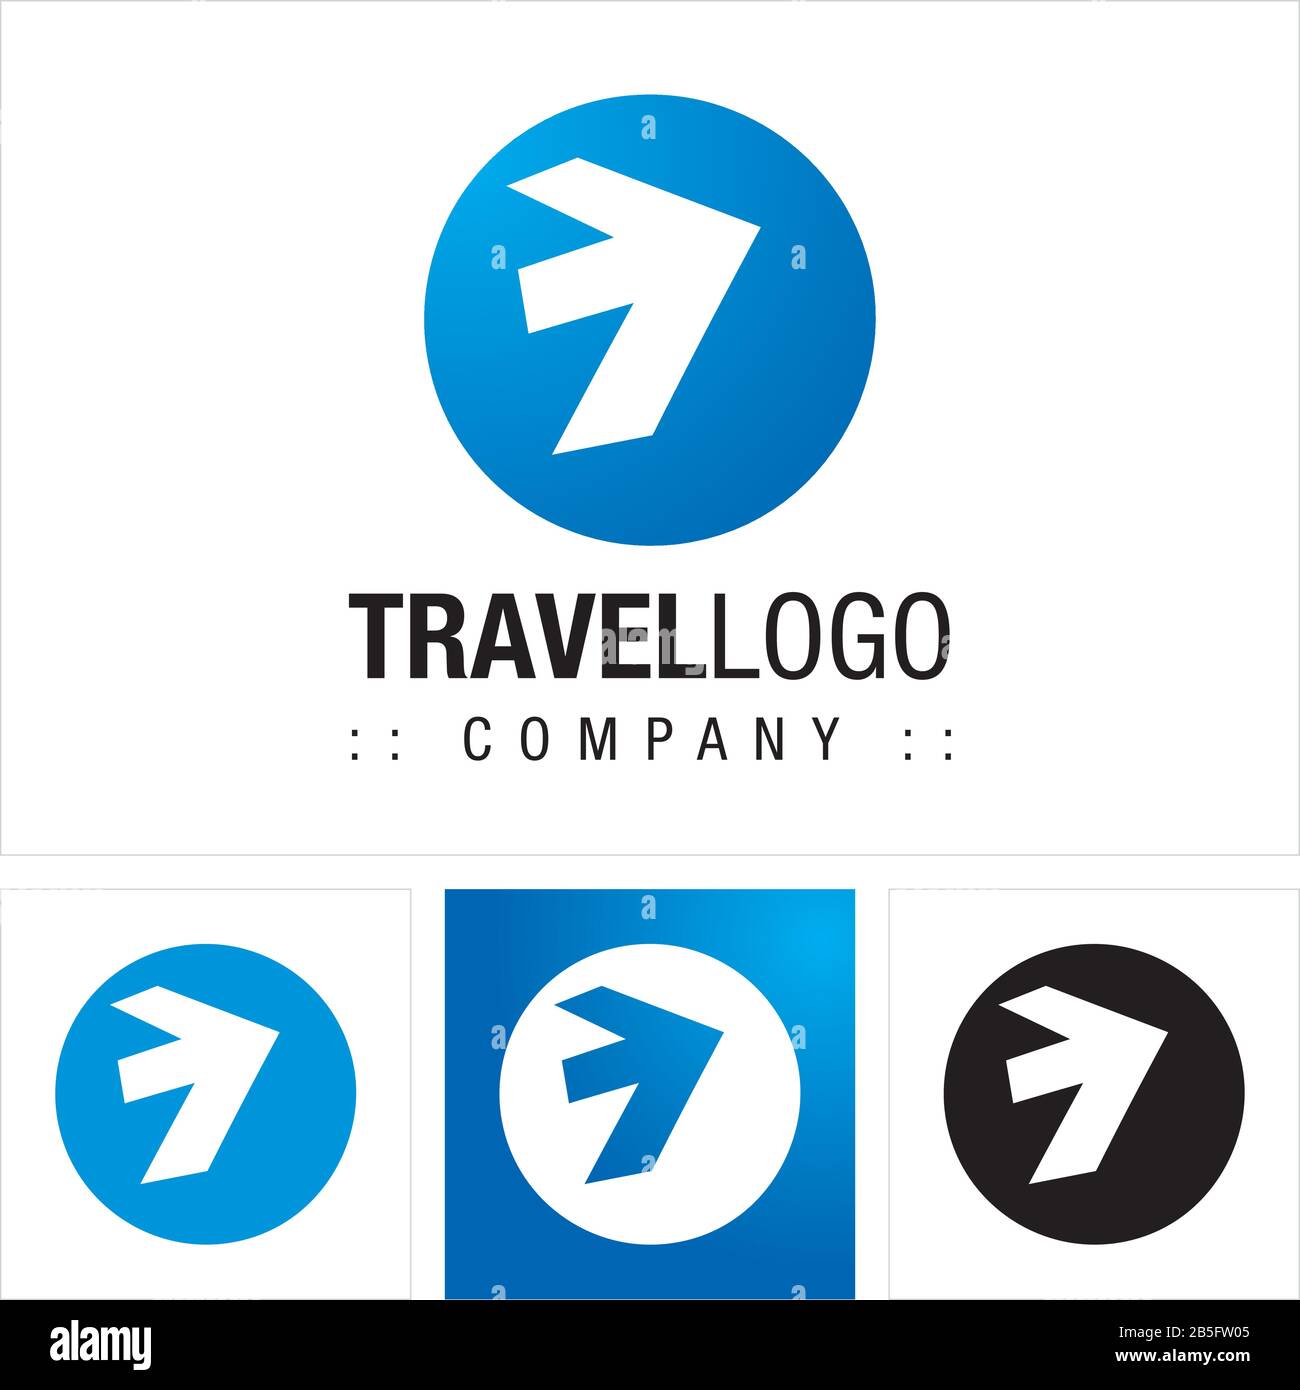 Earth (Circle) and Plane (Arrow) Vector Symbol Company (Travel Agency) Logo (Logotype). Geometric Abstract Minimalist Style Icon Illustration. Elegant Stock Vector